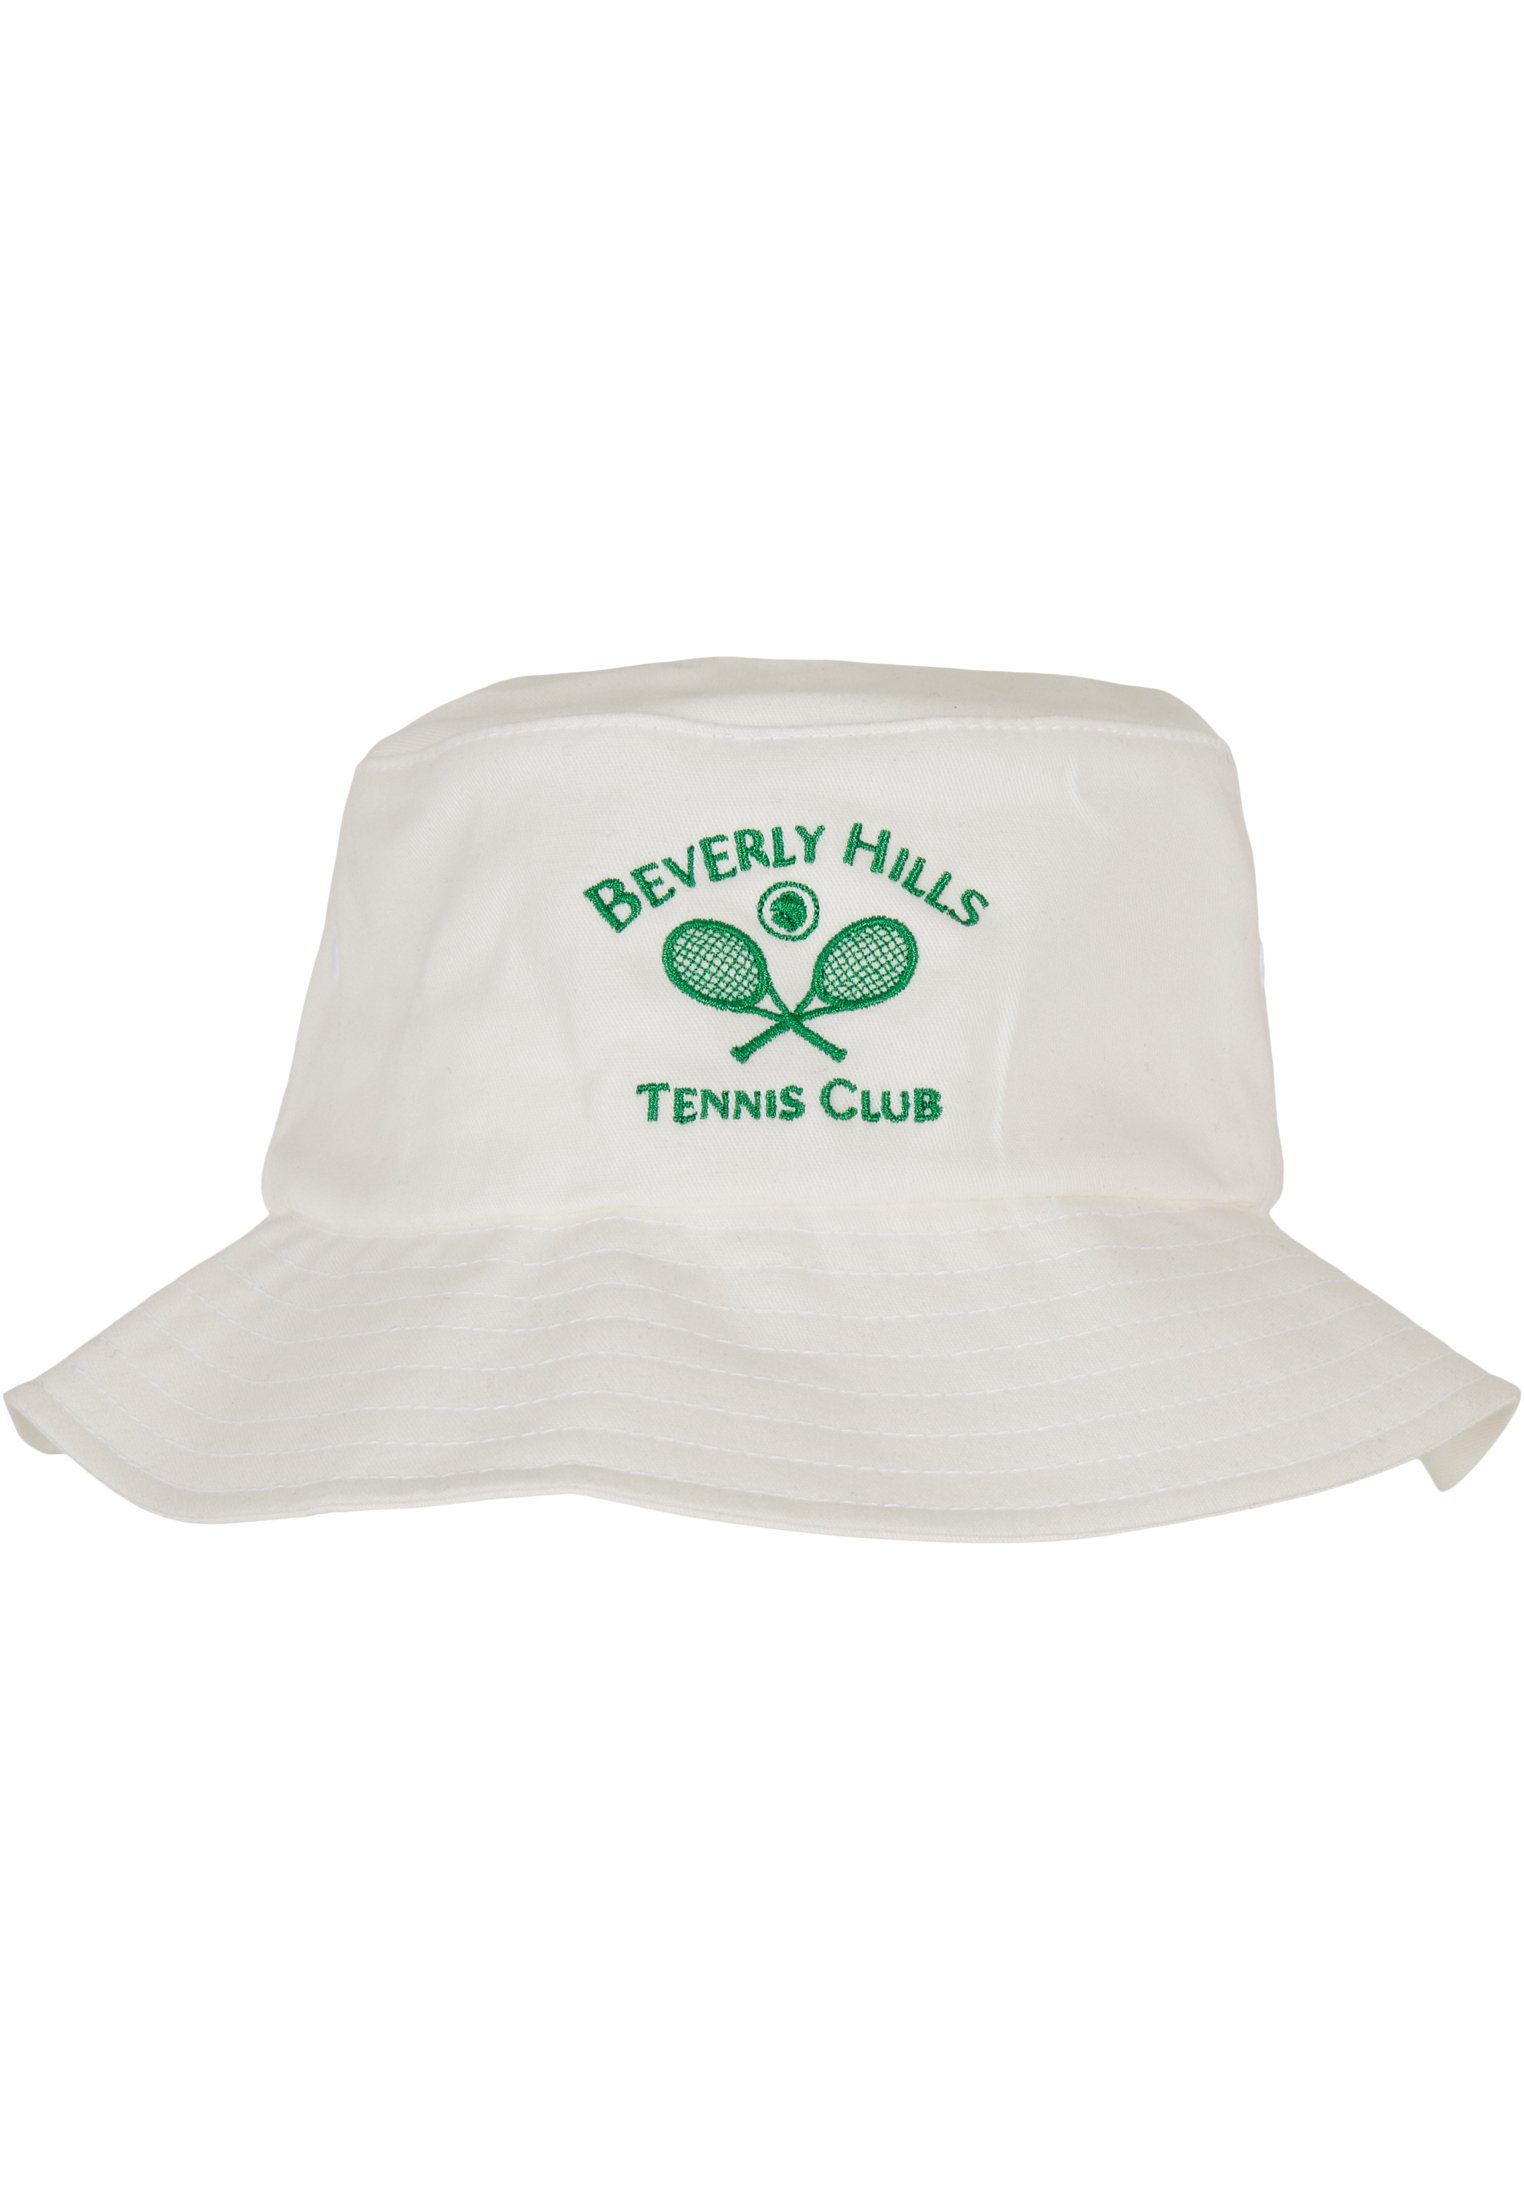 Beverly Hills Club Tennis Hat, Flex hohe Cap Bucket MisterTee Accessoires Verarbeitung Qualitativ